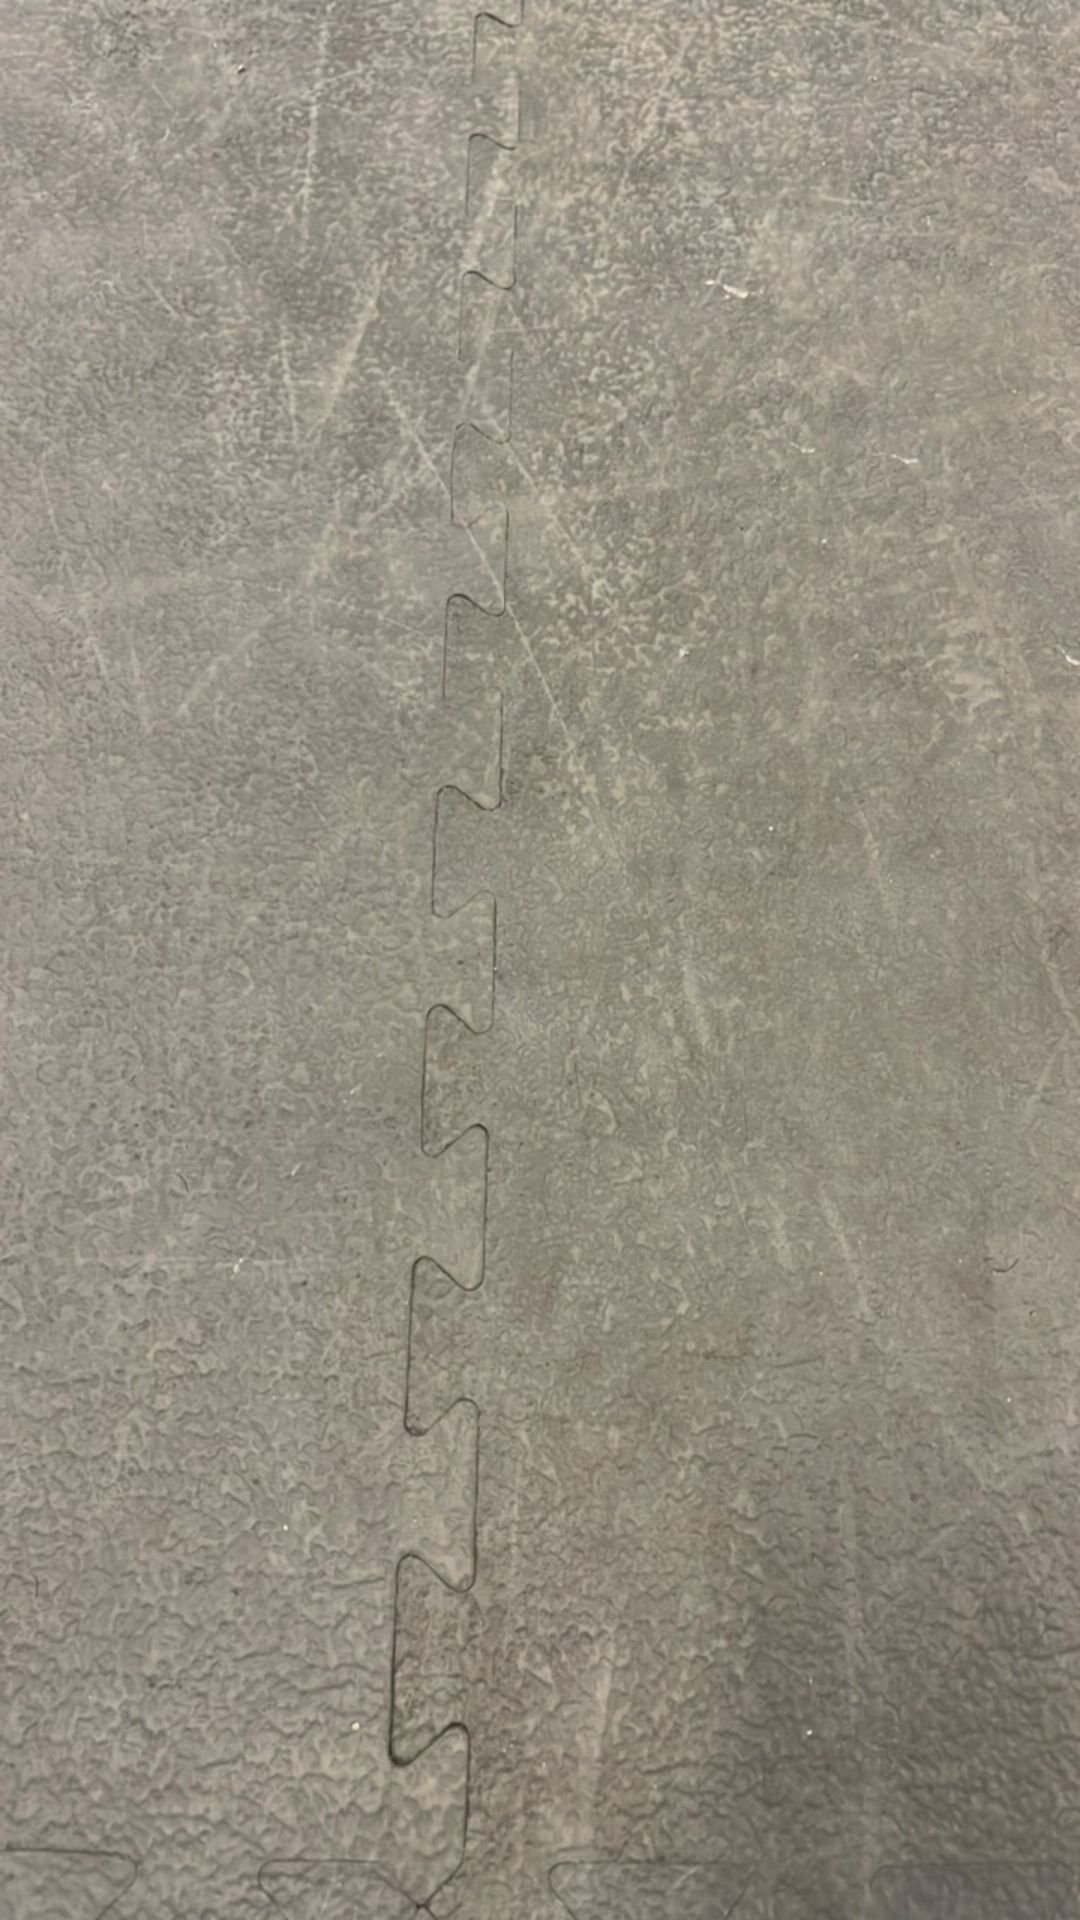 Approximately 50 Grey Interlocking Gym Floor Tiles - Image 3 of 5